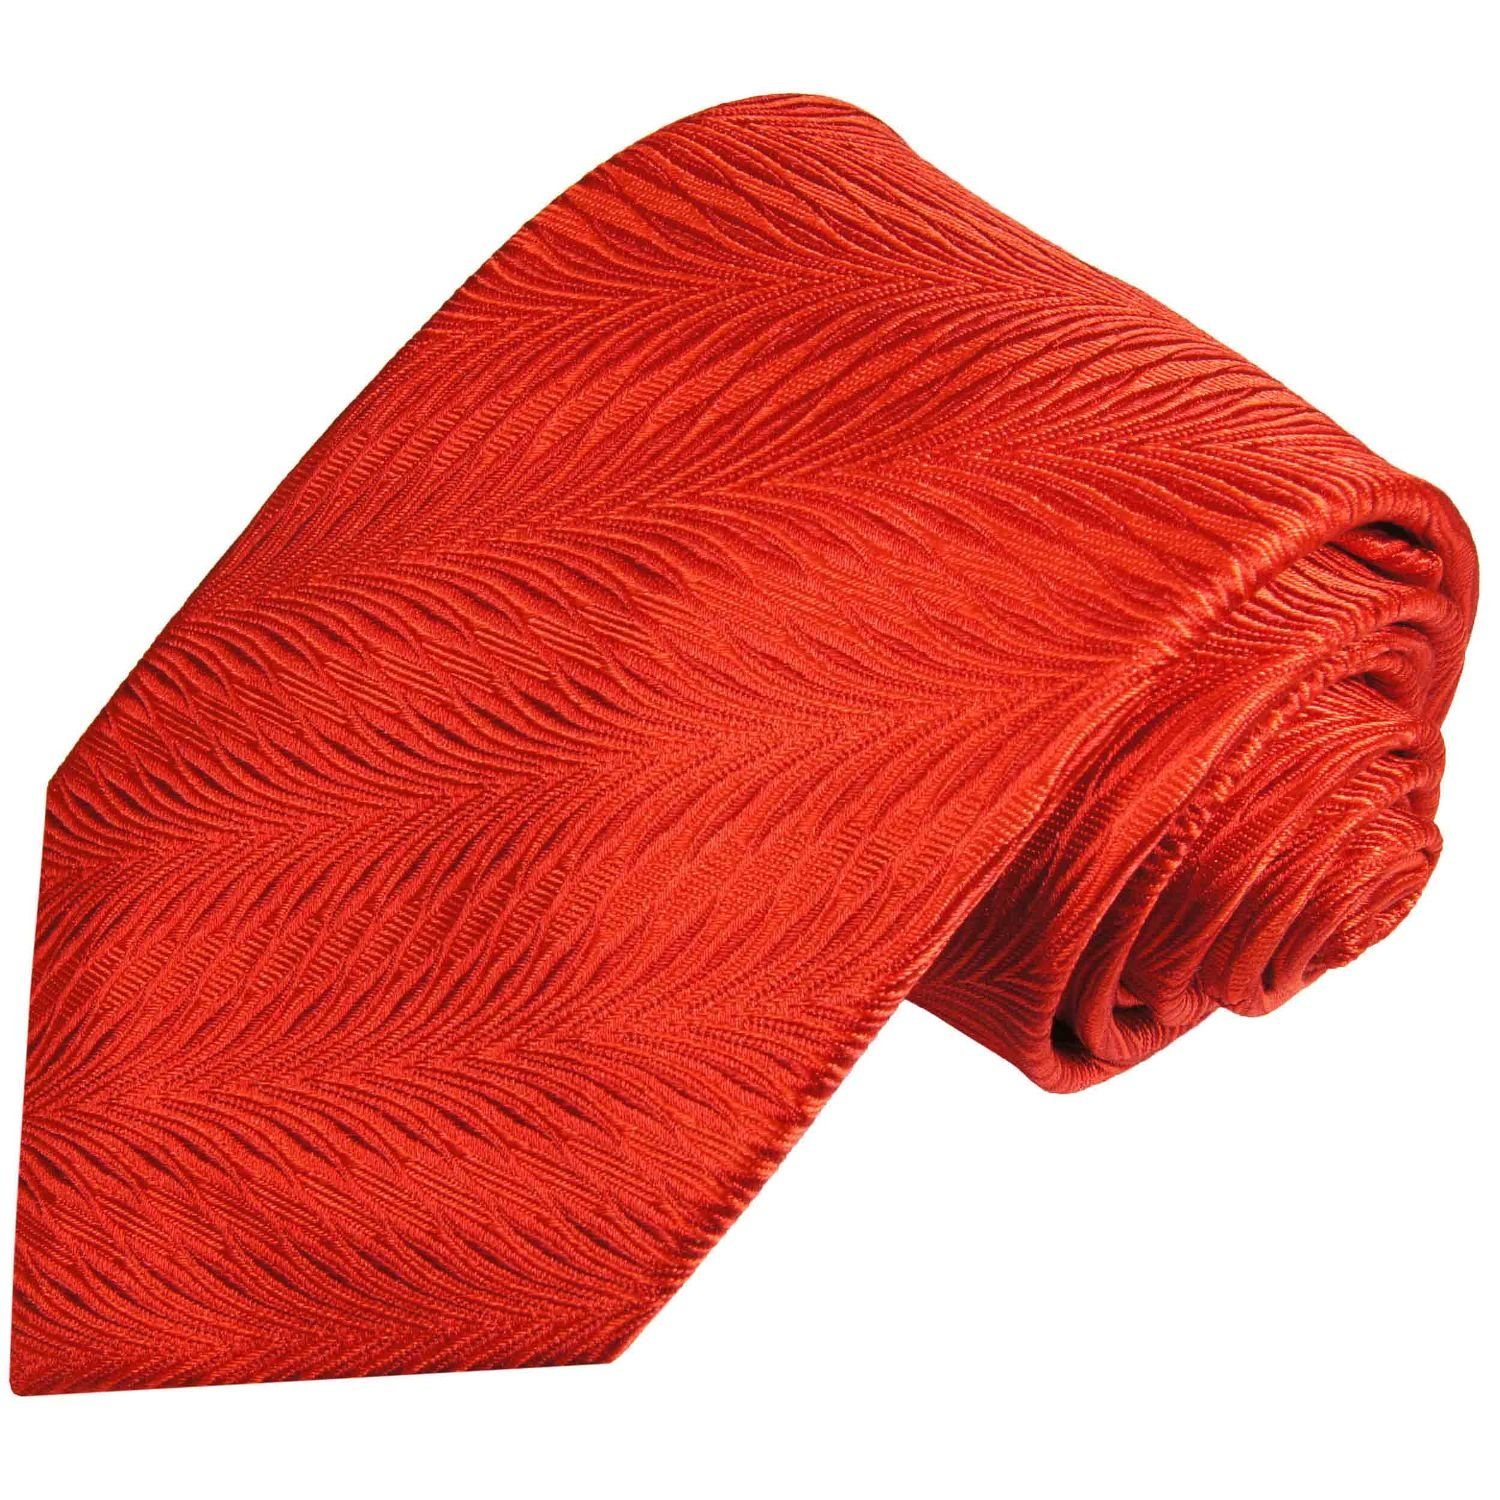 Paul Malone Krawatte Designer Seidenkrawatte Herren Schlips modern gestreift 100% Seide Schmal (6cm), rot 2009